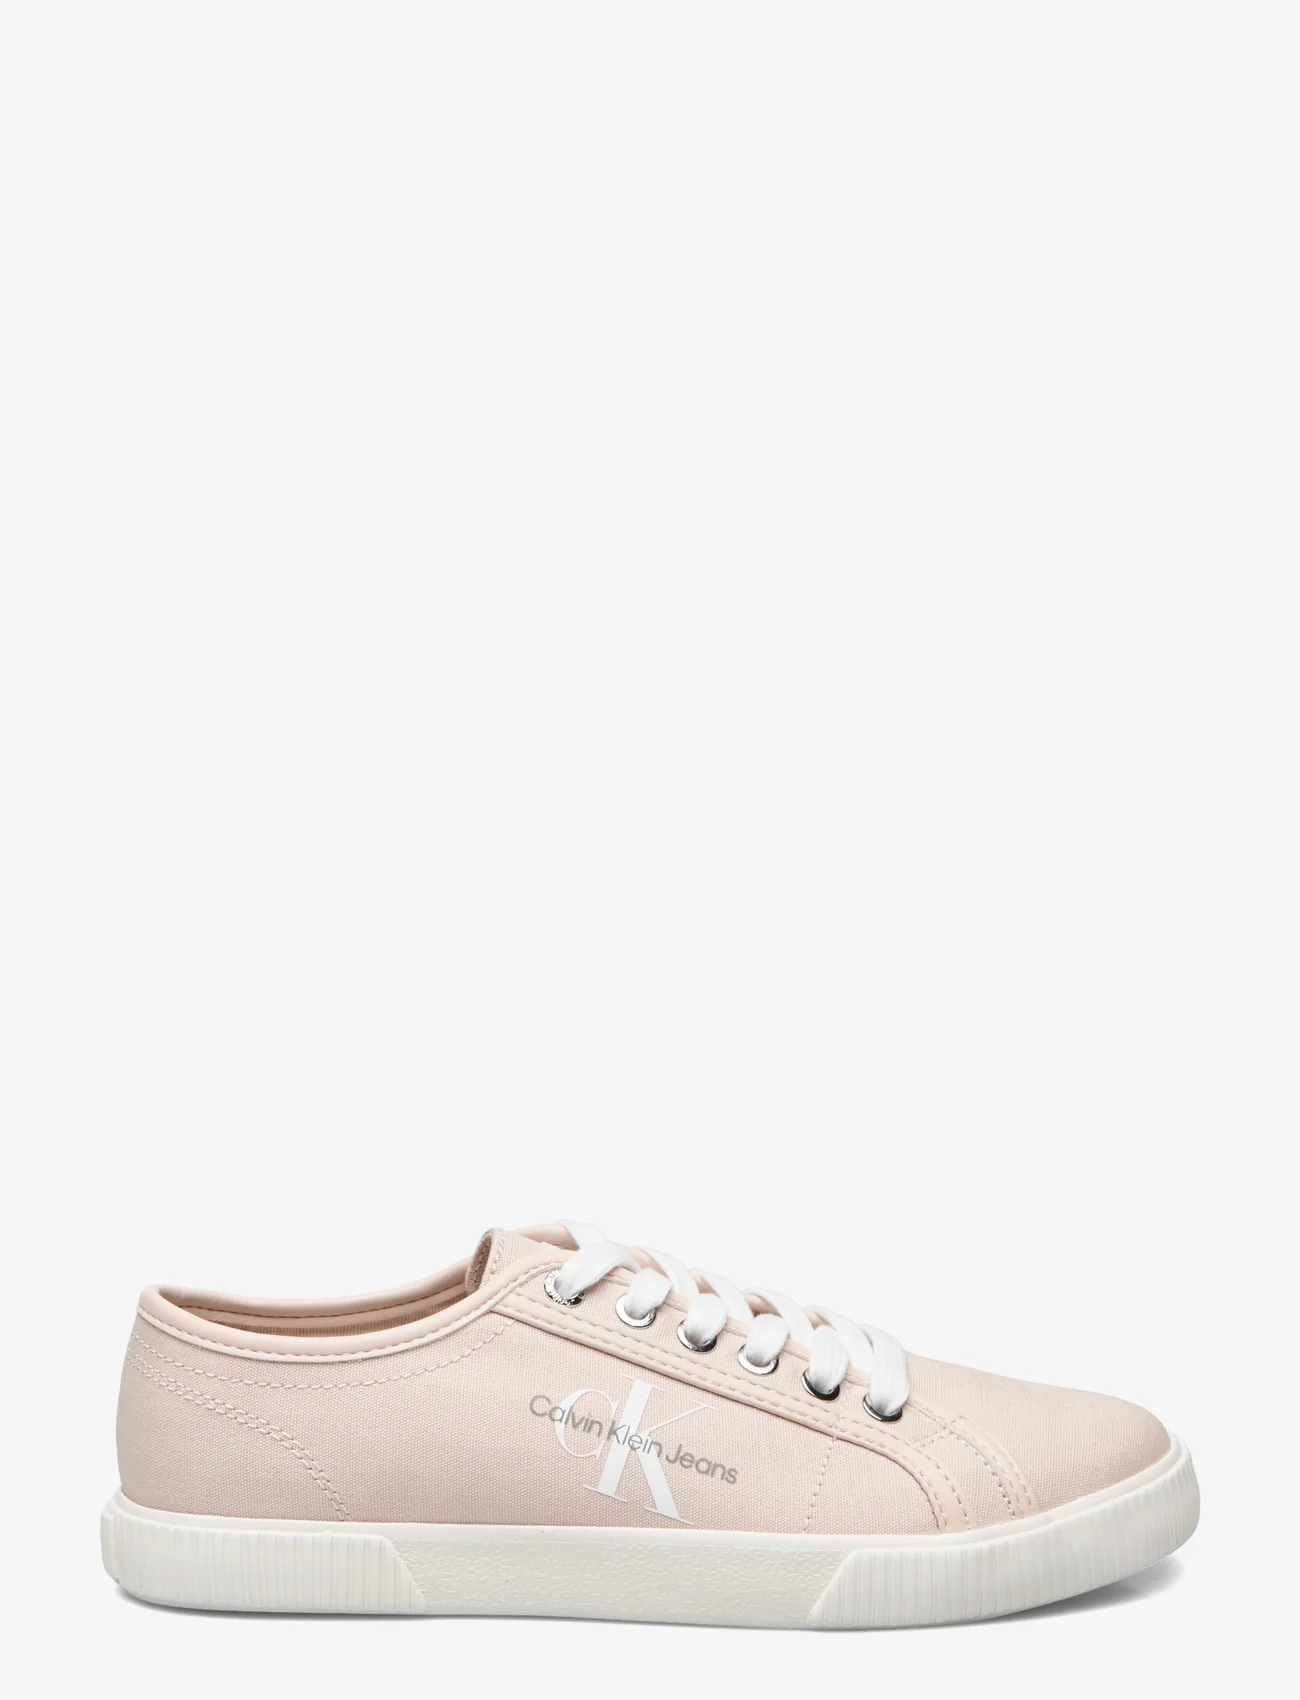 Calvin Klein - ESS VULC MONO W - sneakers - whisper pink/bright white - 1